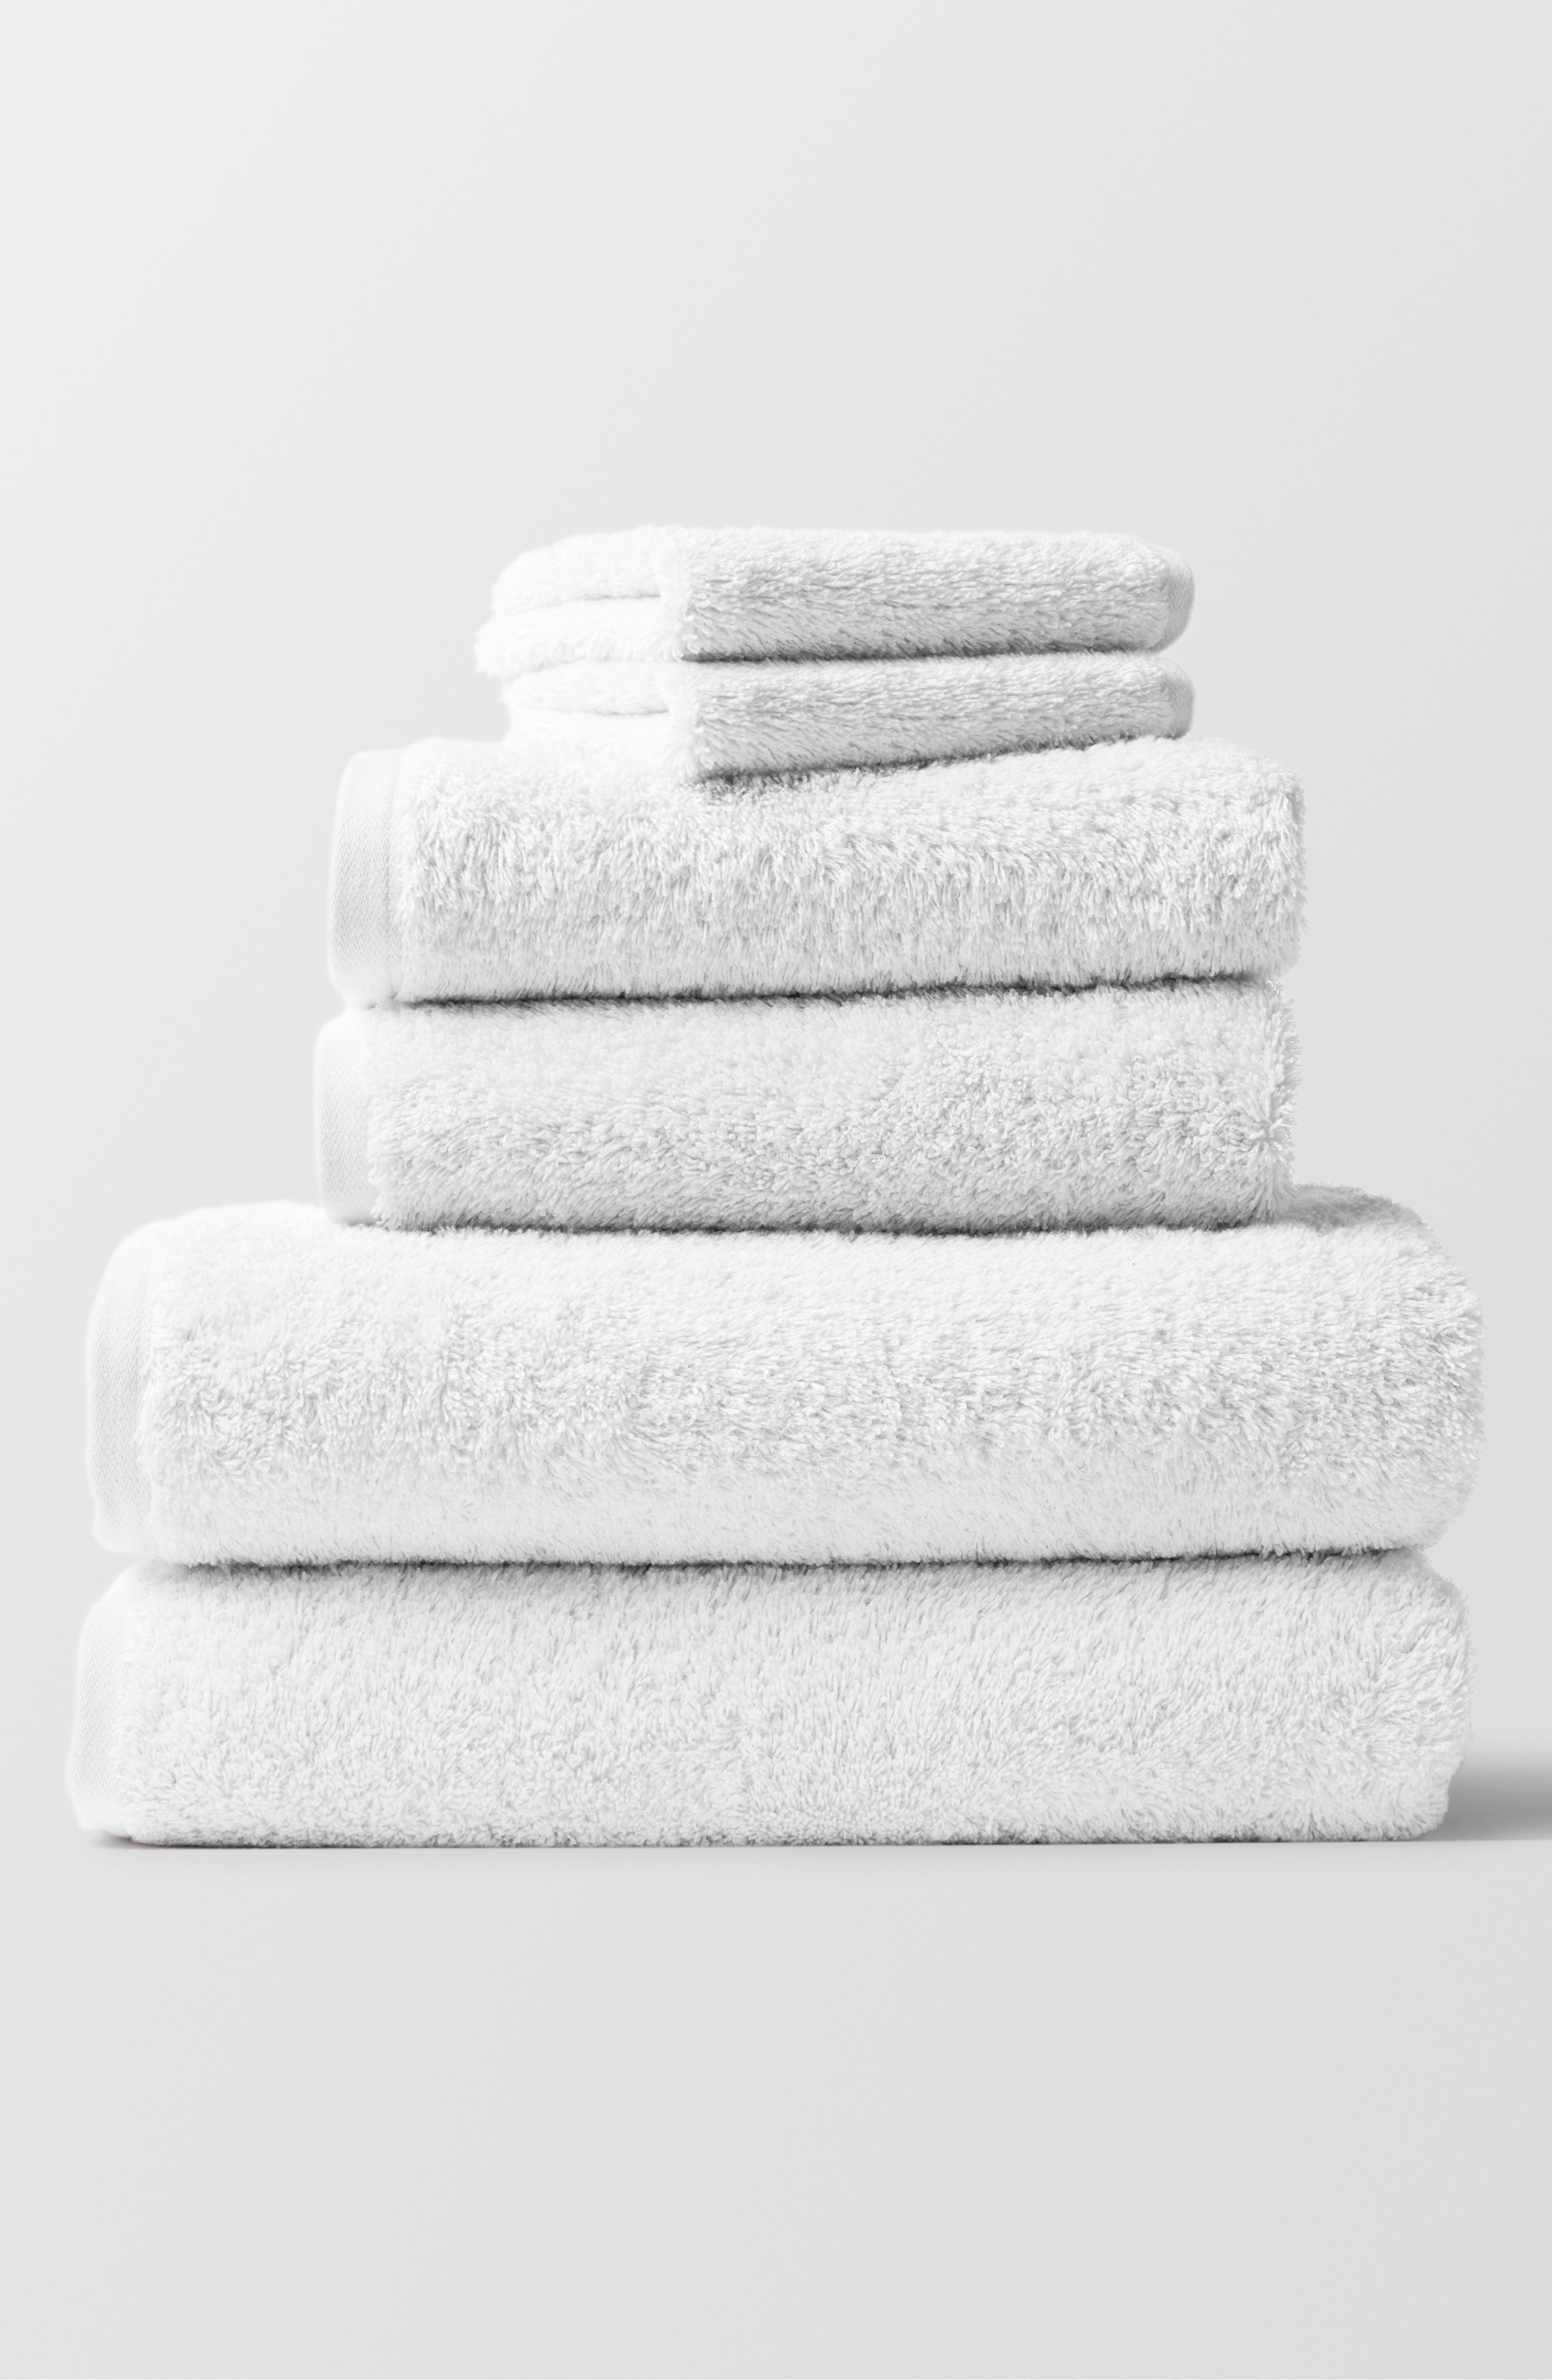 Coyuchi Cloud Loom(TM) Organic Cotton Bath Towel in Alpine White